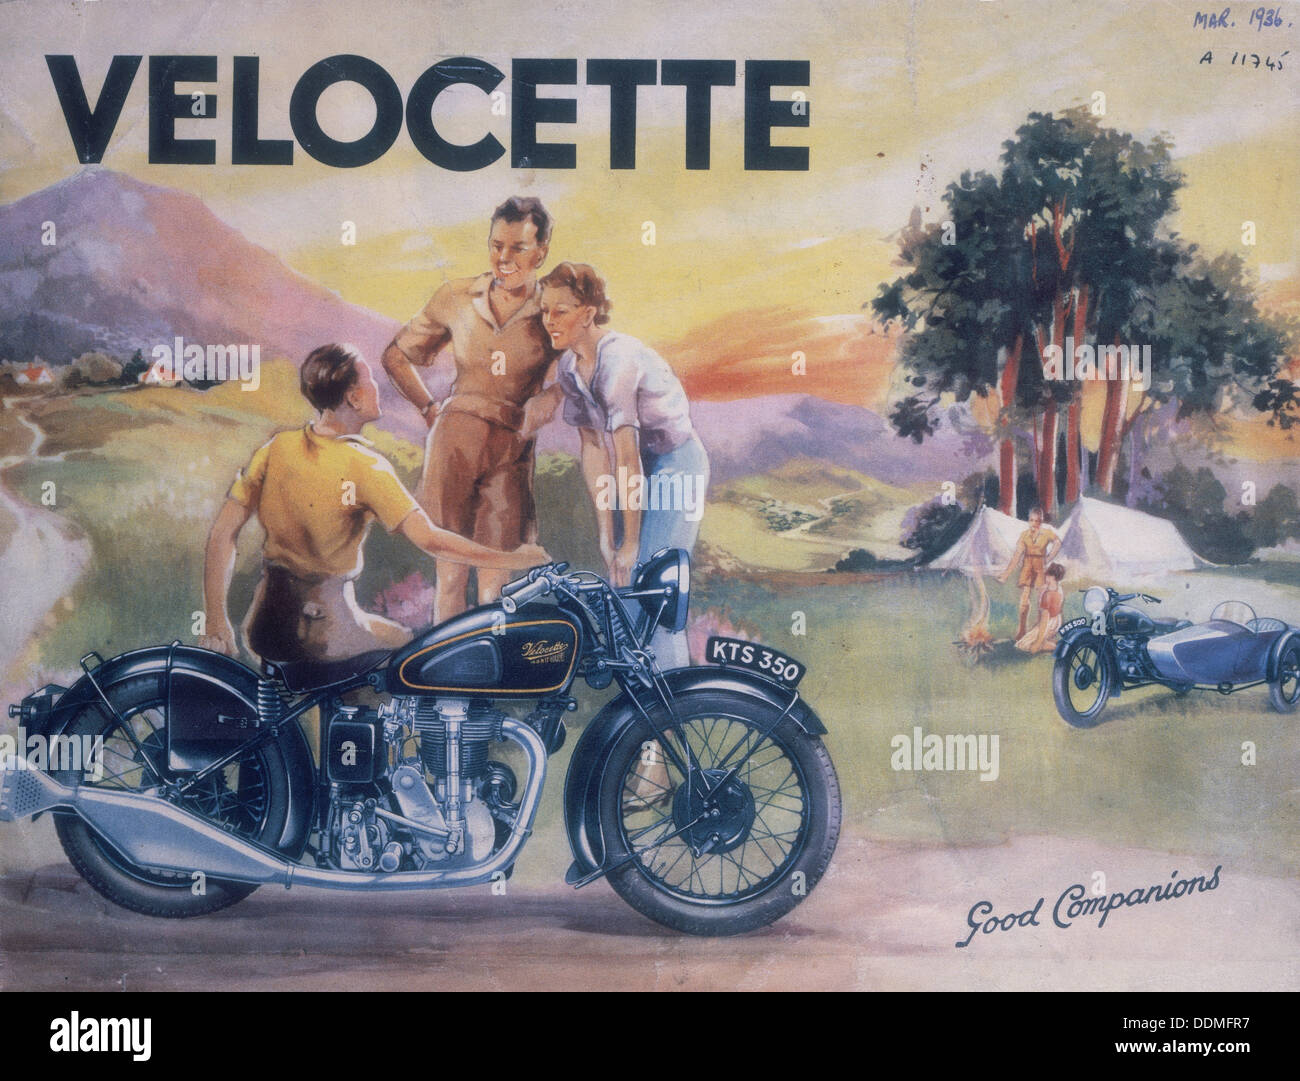 Poster advertising Velocette motor bikes, 1936. Artist: Unknown Stock Photo